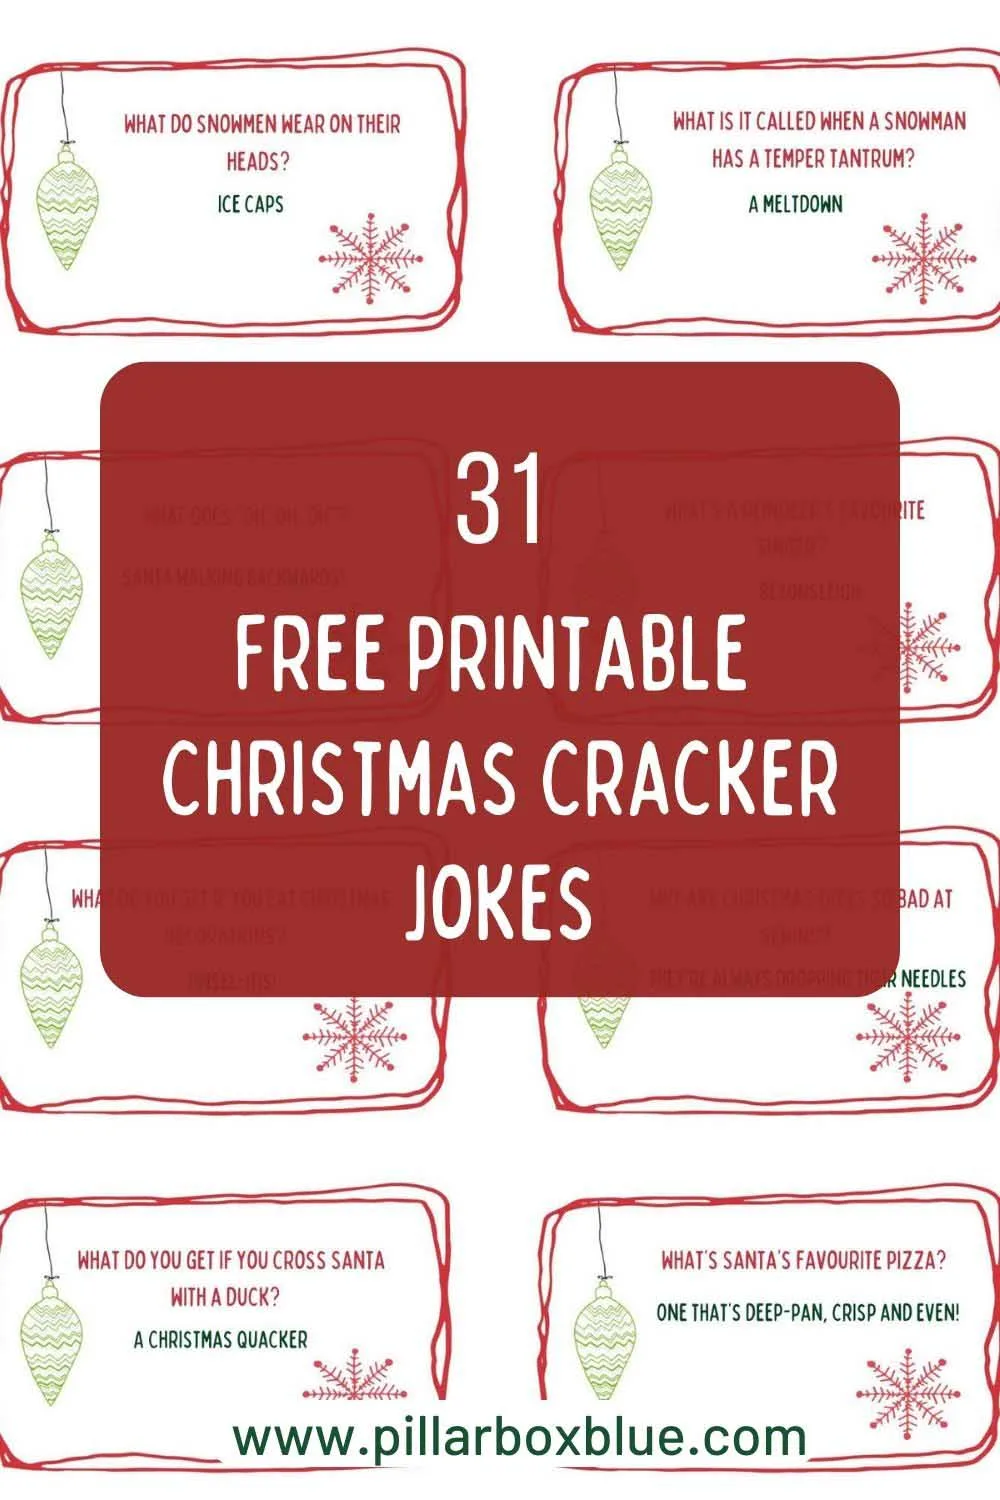 Free printable Christmas cracker jokes